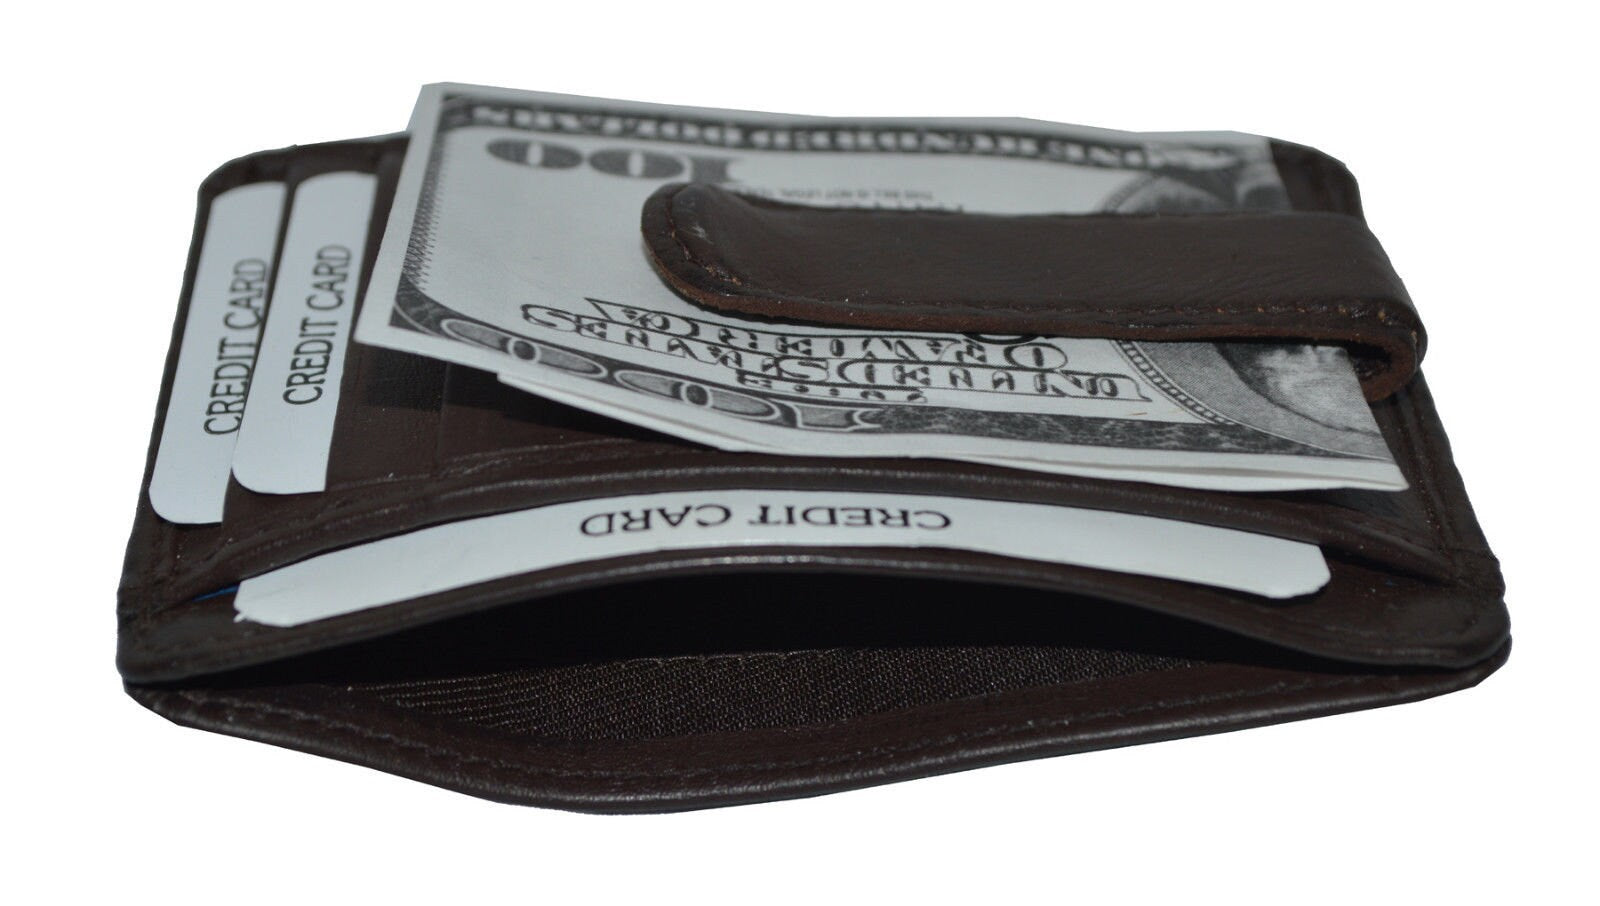 Mens Genuine Leather Magnetic Money Clip Credit Card Holder